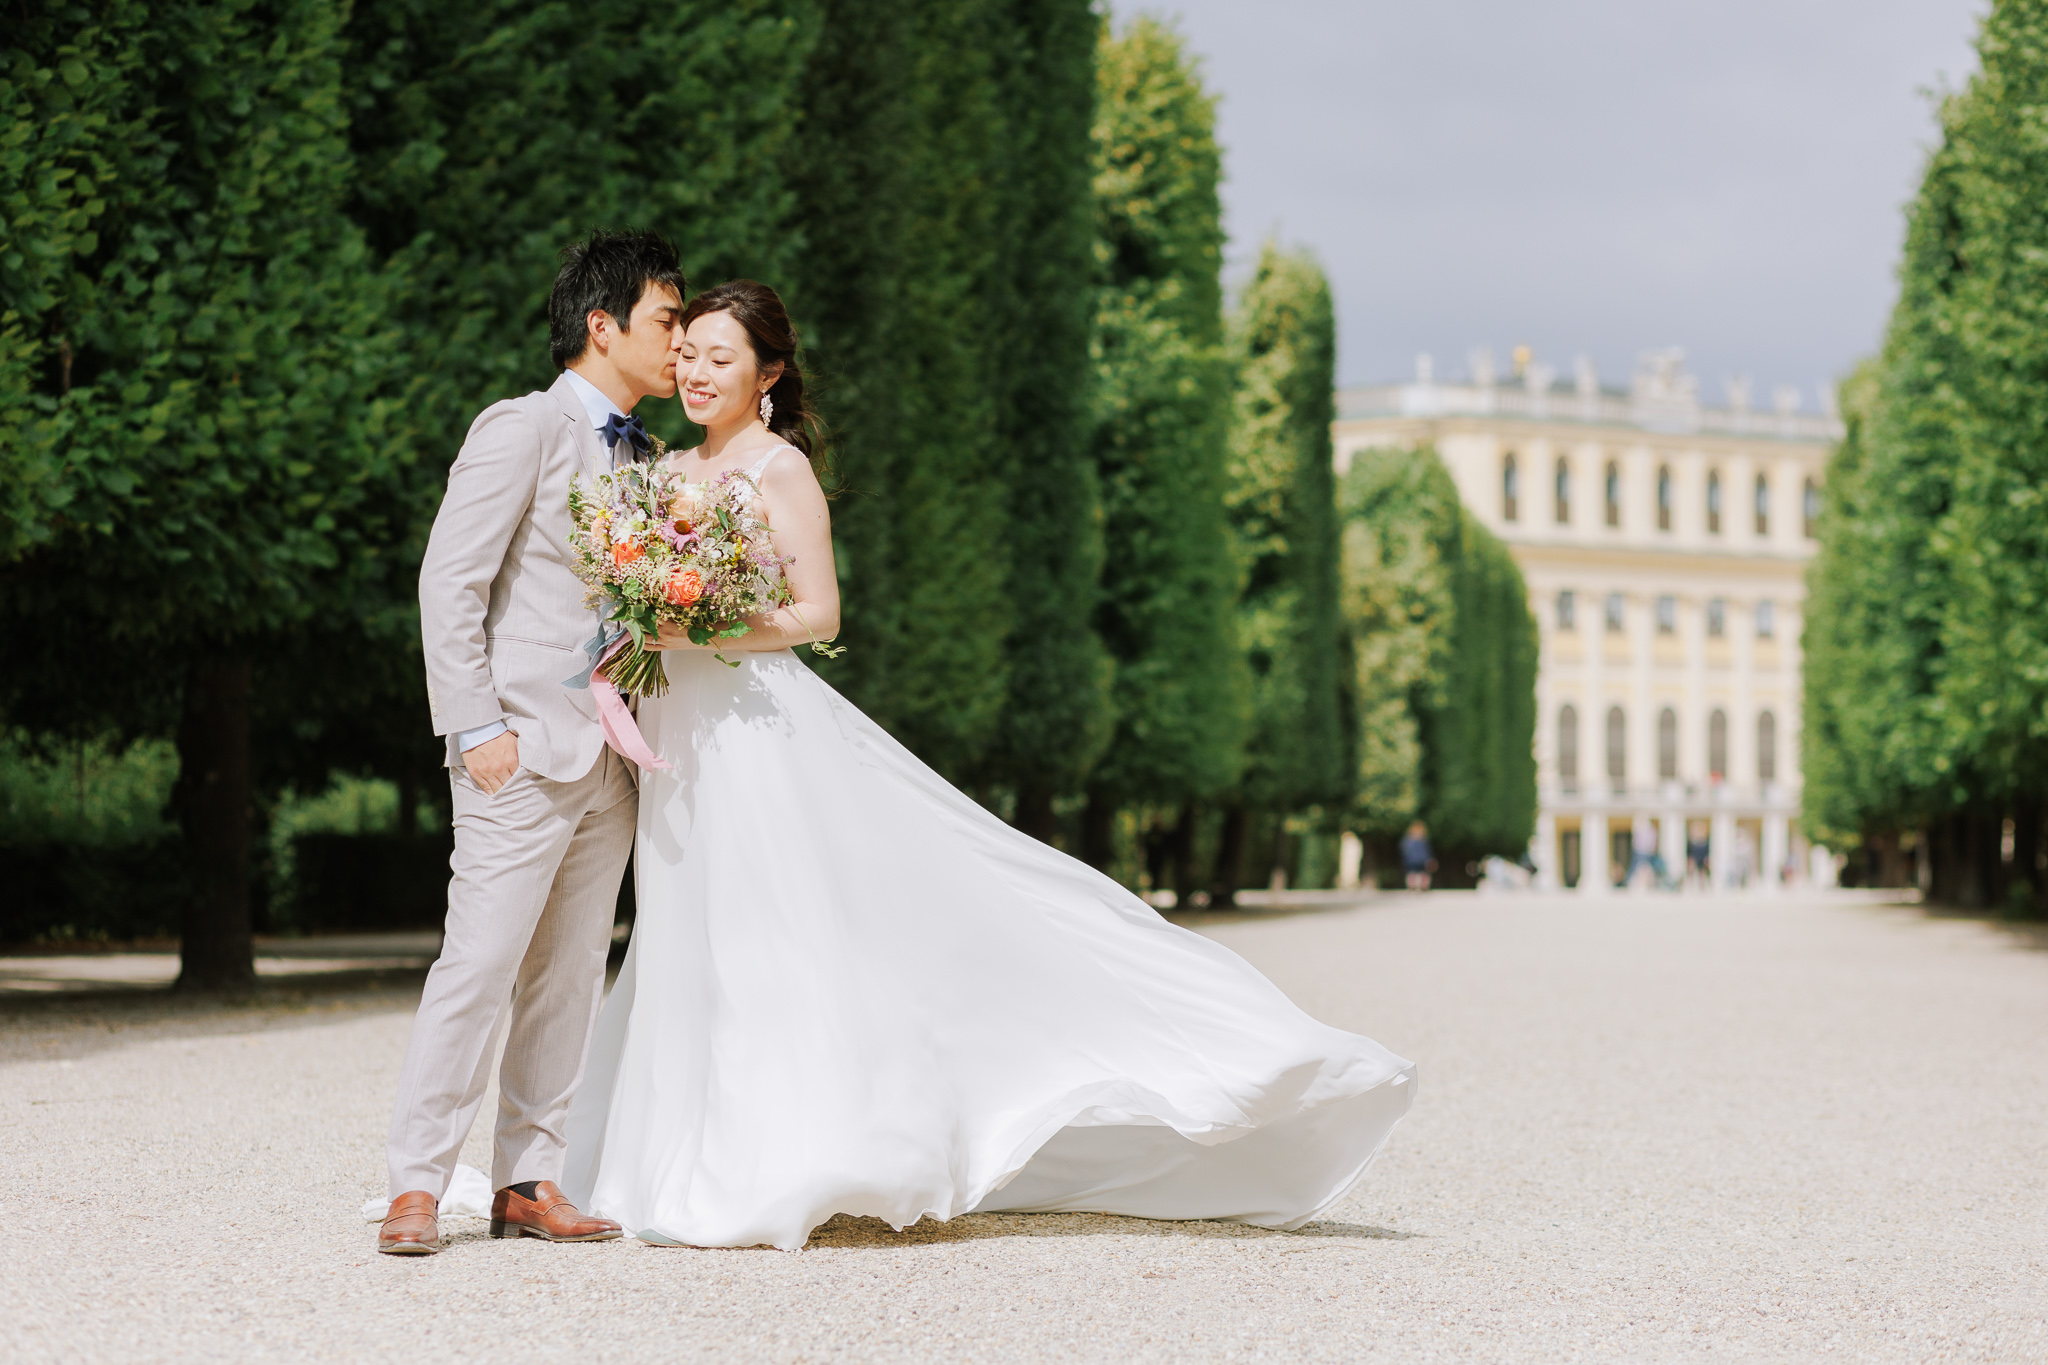 Amazing couple photos at Schönbrunn, Vienna by Elena Azzalini Photography